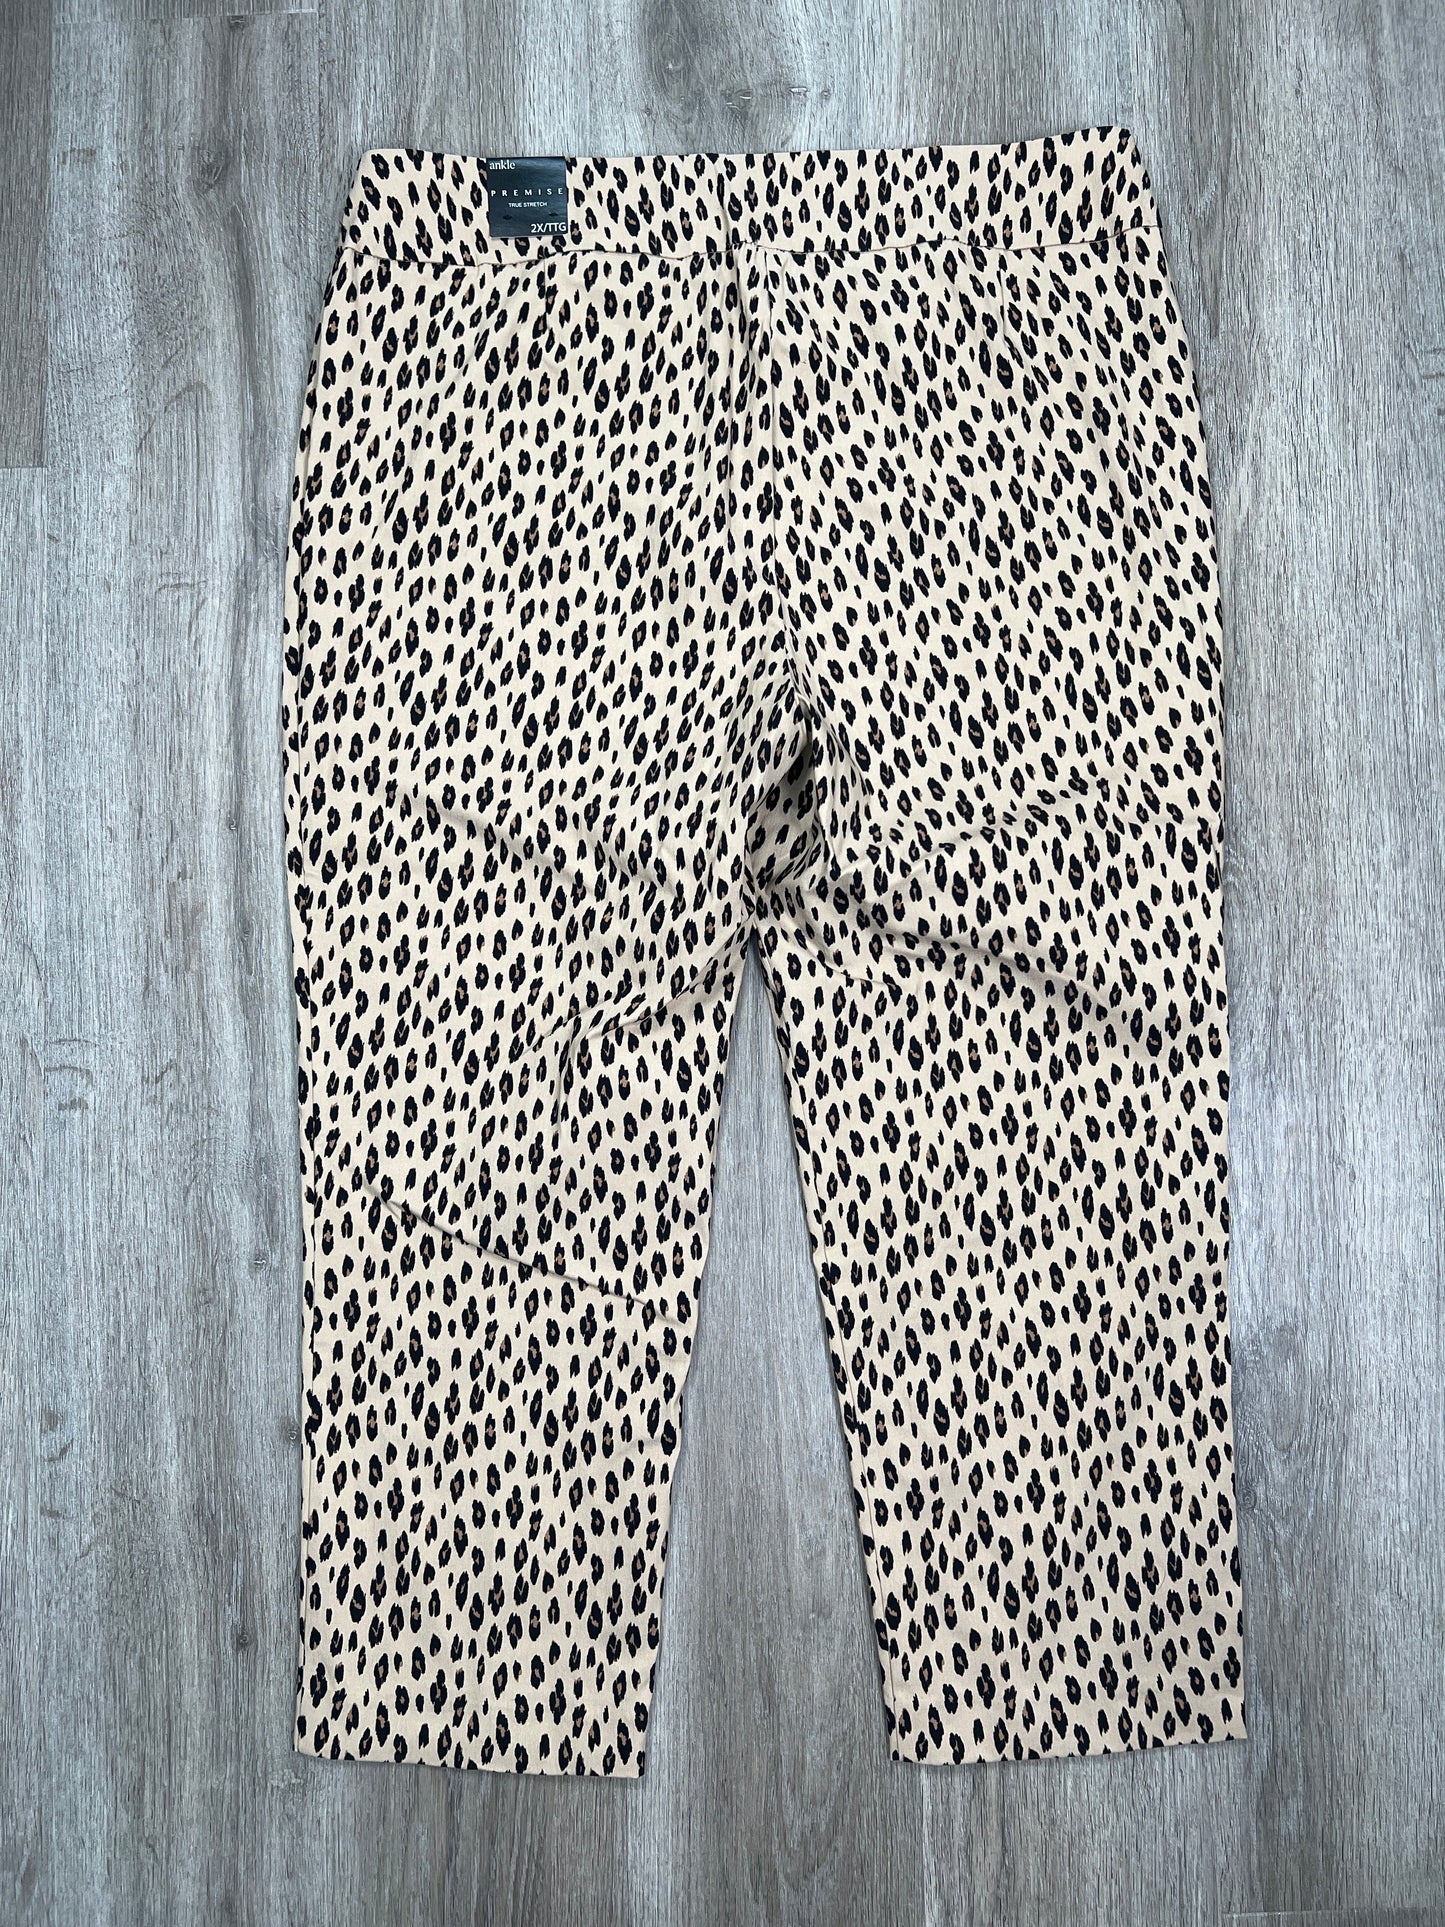 Leopard Print Pants Cropped Premise, Size 2x